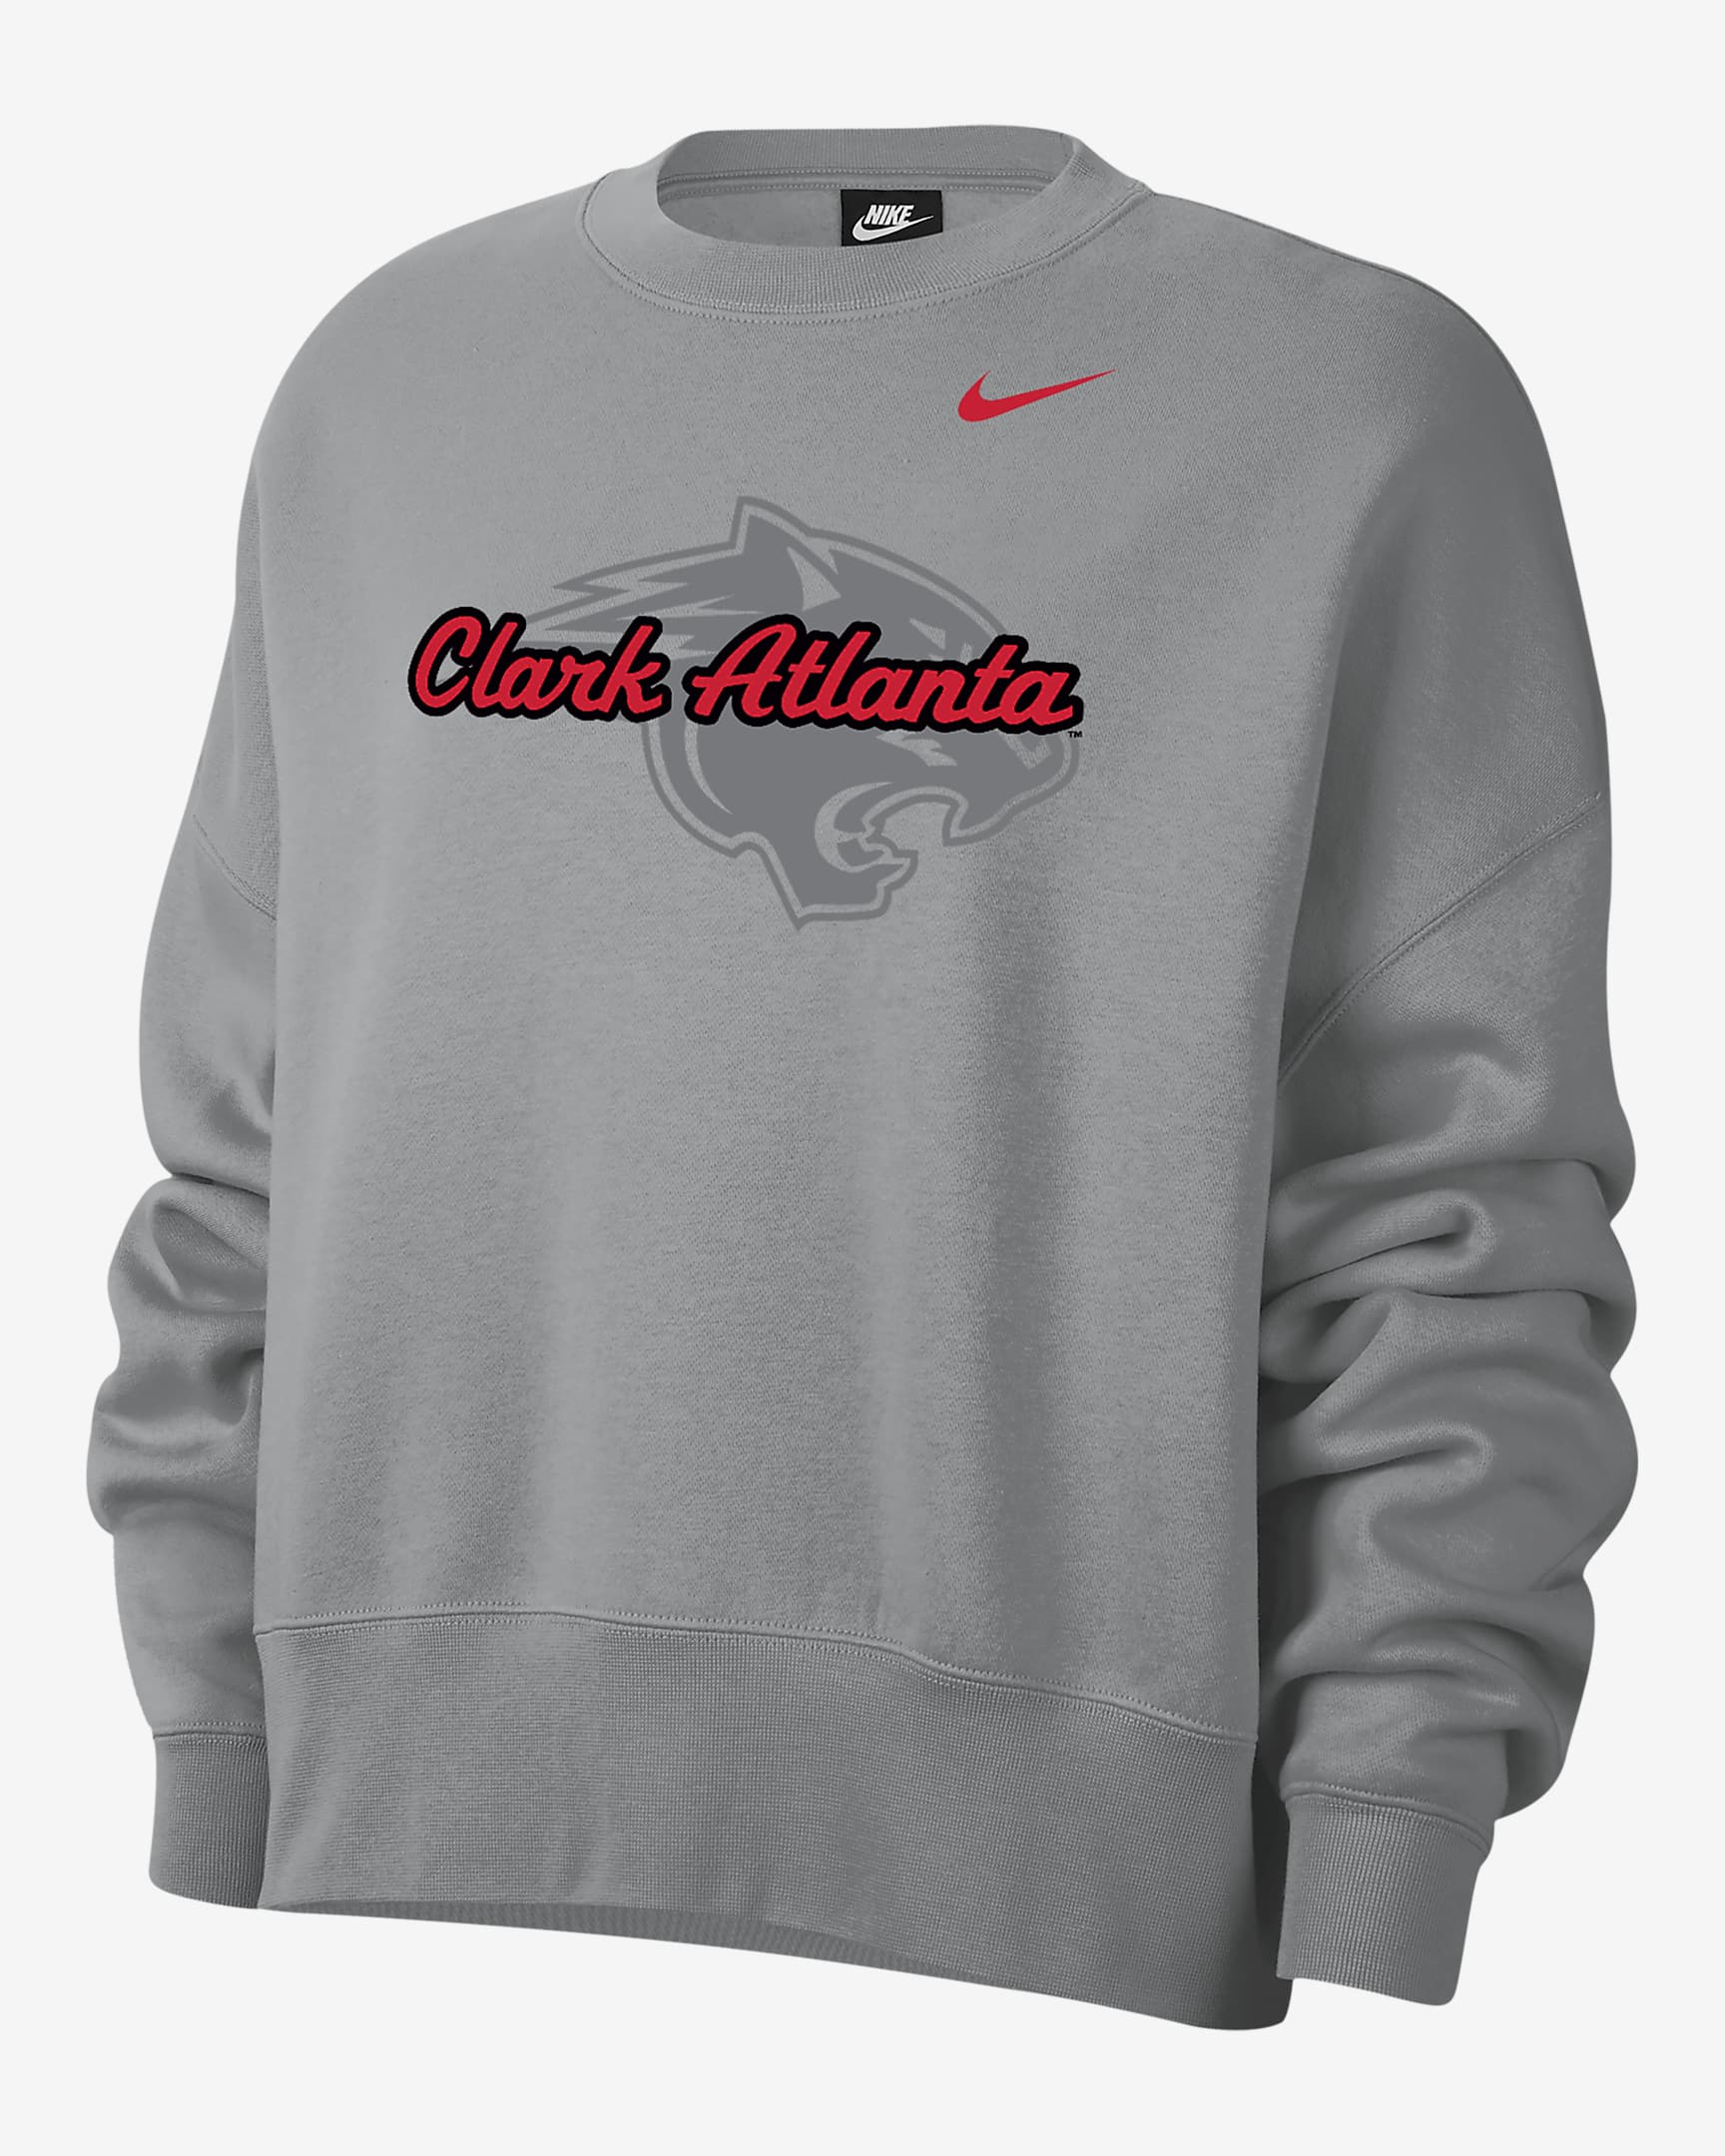 Nike College (Clark Atlanta) Women's Crew-Neck Sweatshirt. Nike.com